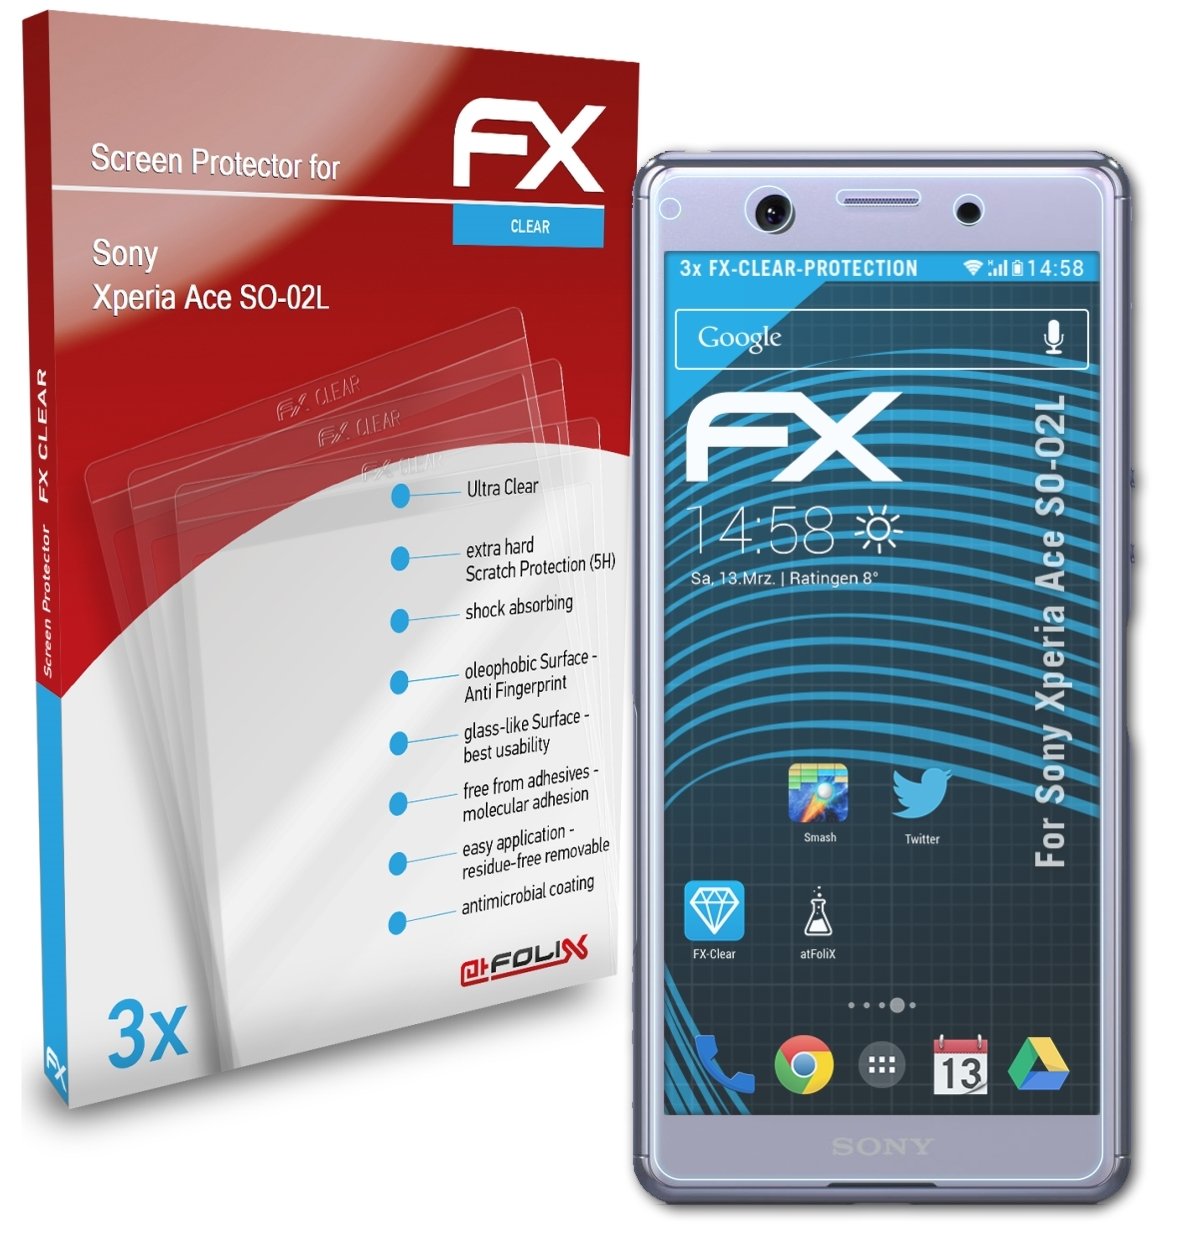 (SO-02L)) Xperia ATFOLIX Displayschutz(für 3x Sony Ace FX-Clear